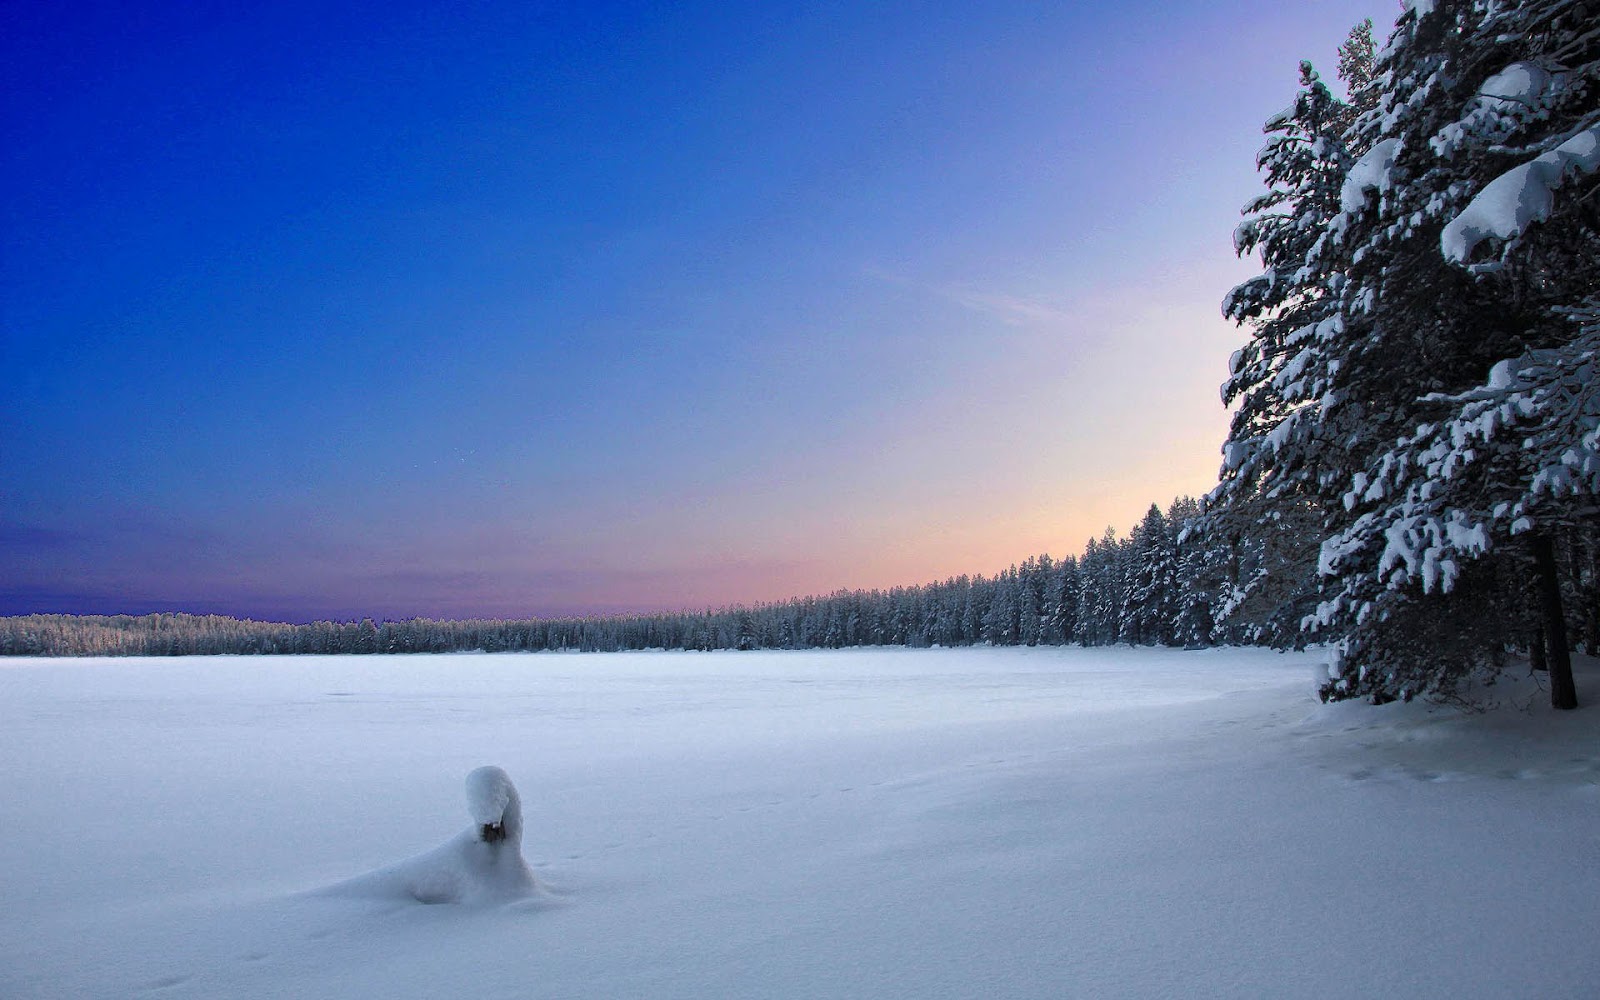 Winter In Finland Wallpaper Picswallpaper